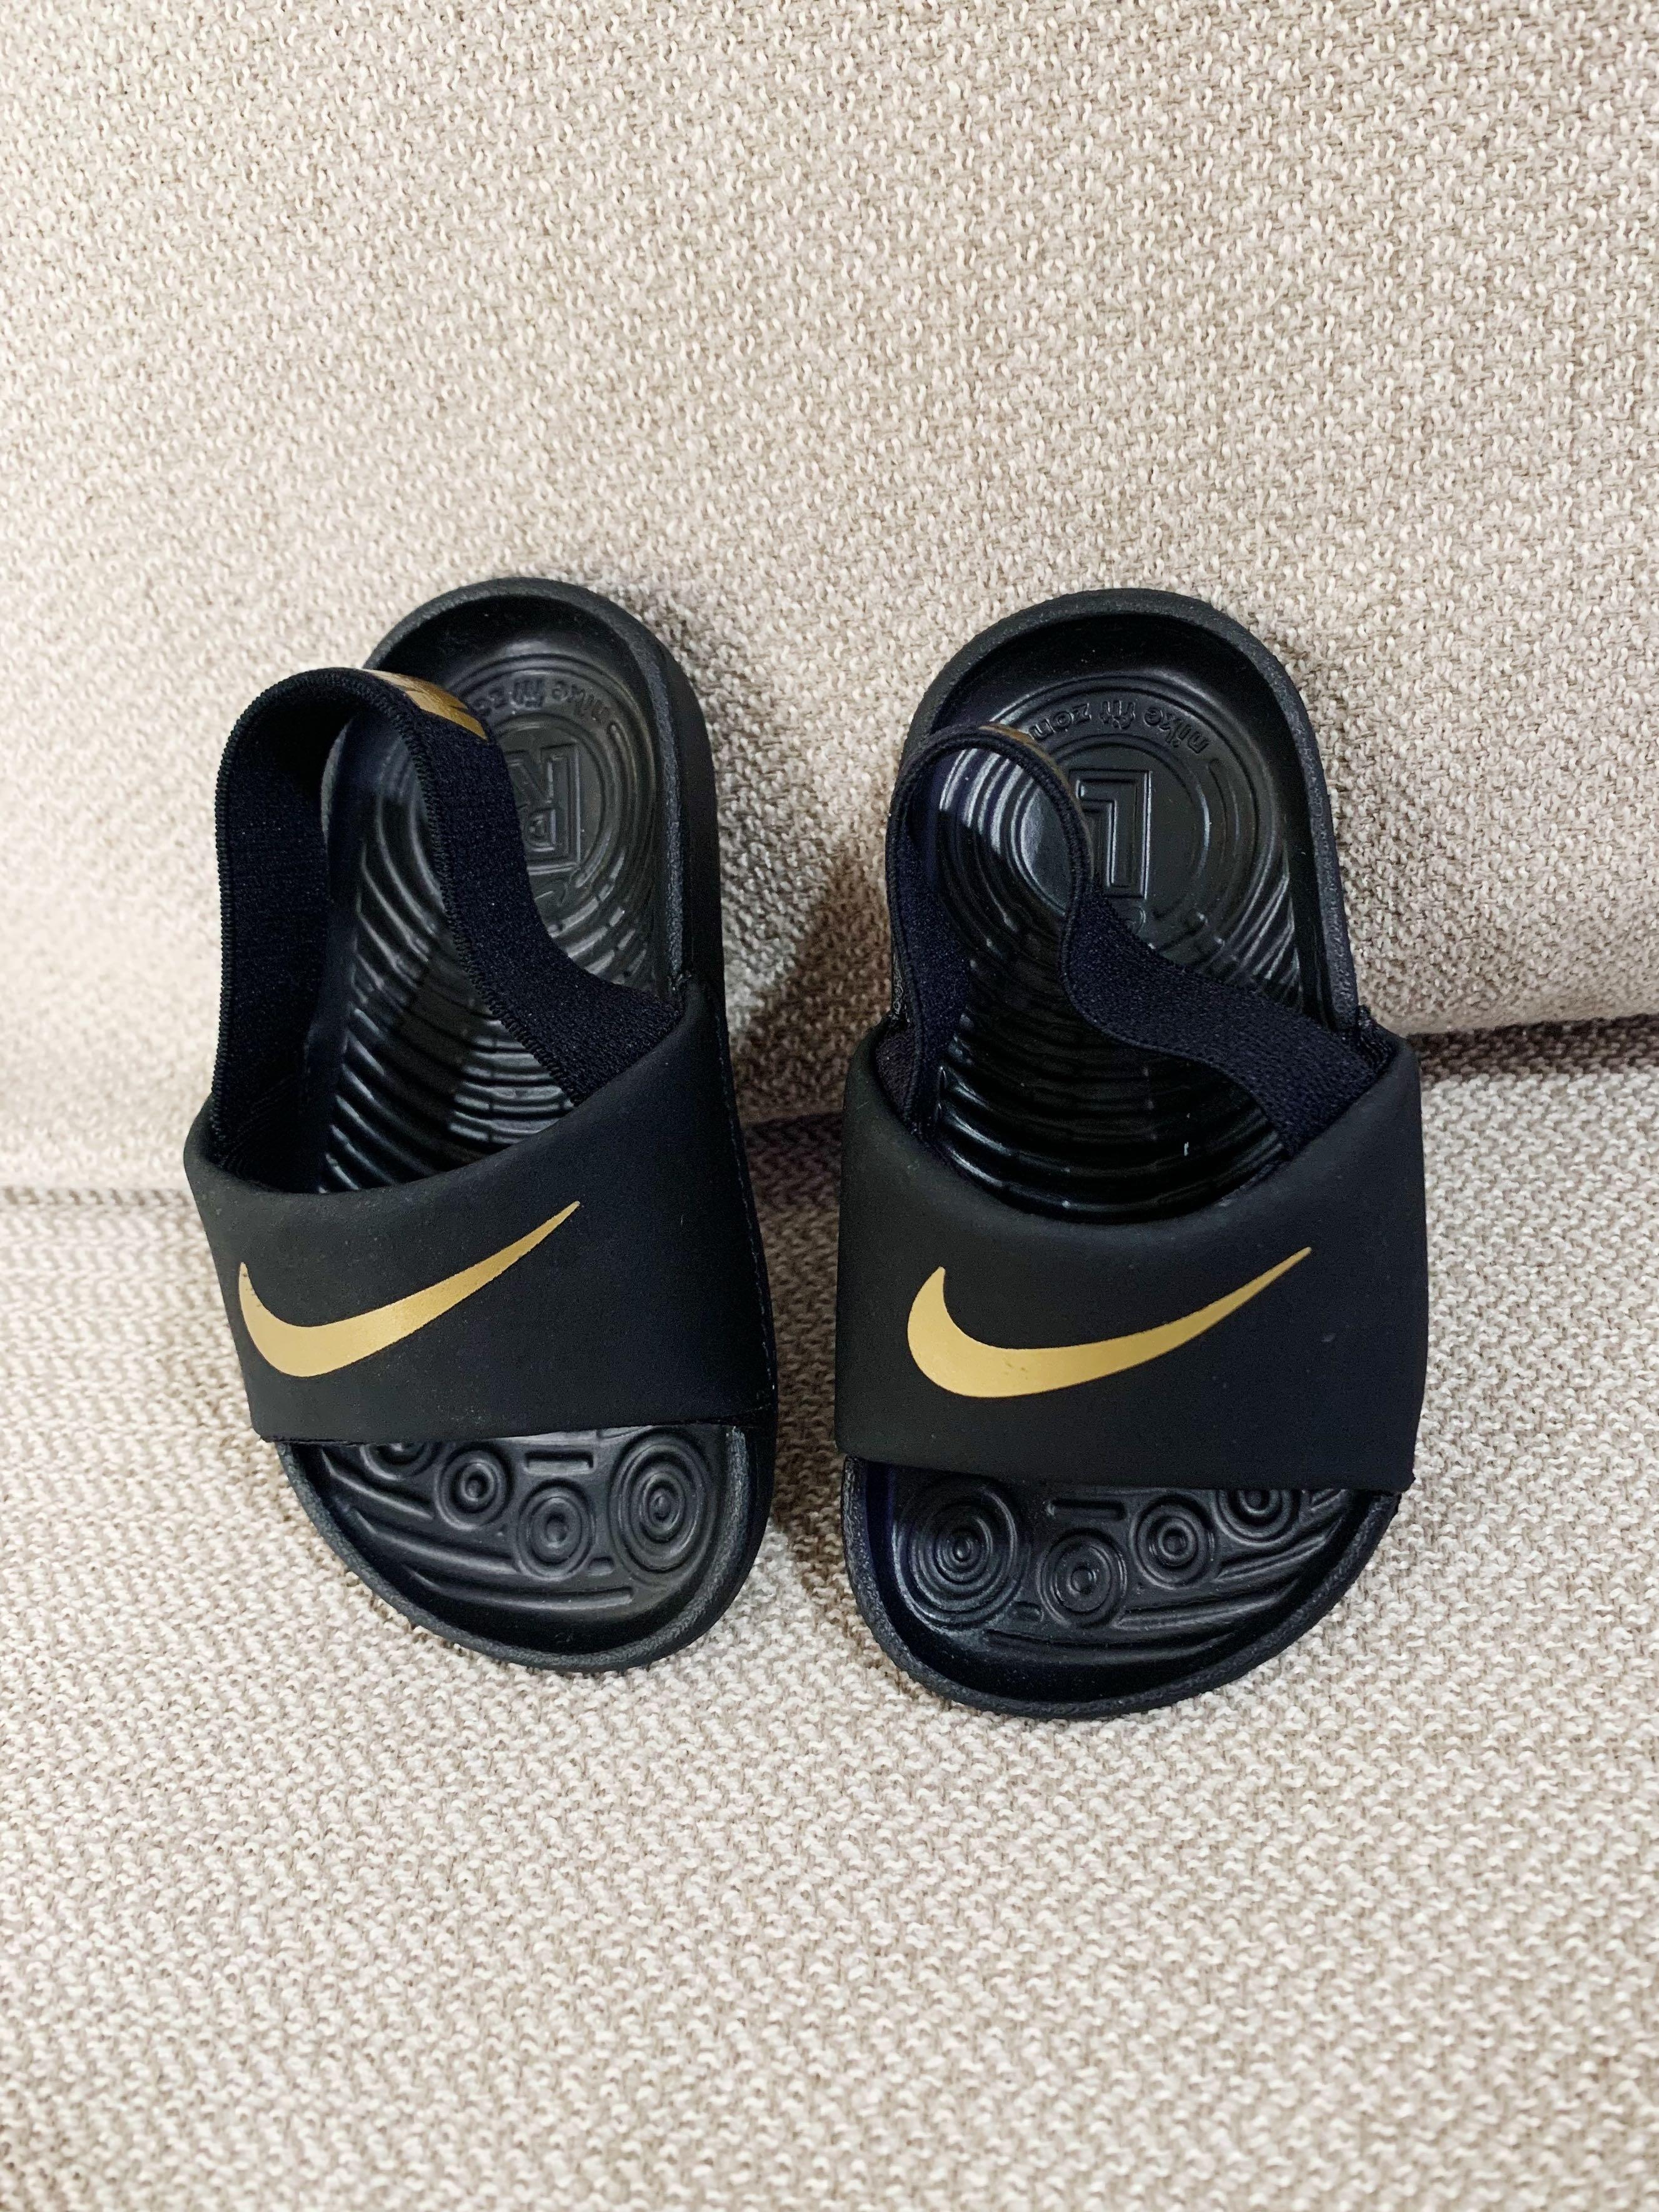 Nike sandals baby kids 5c, Babies 